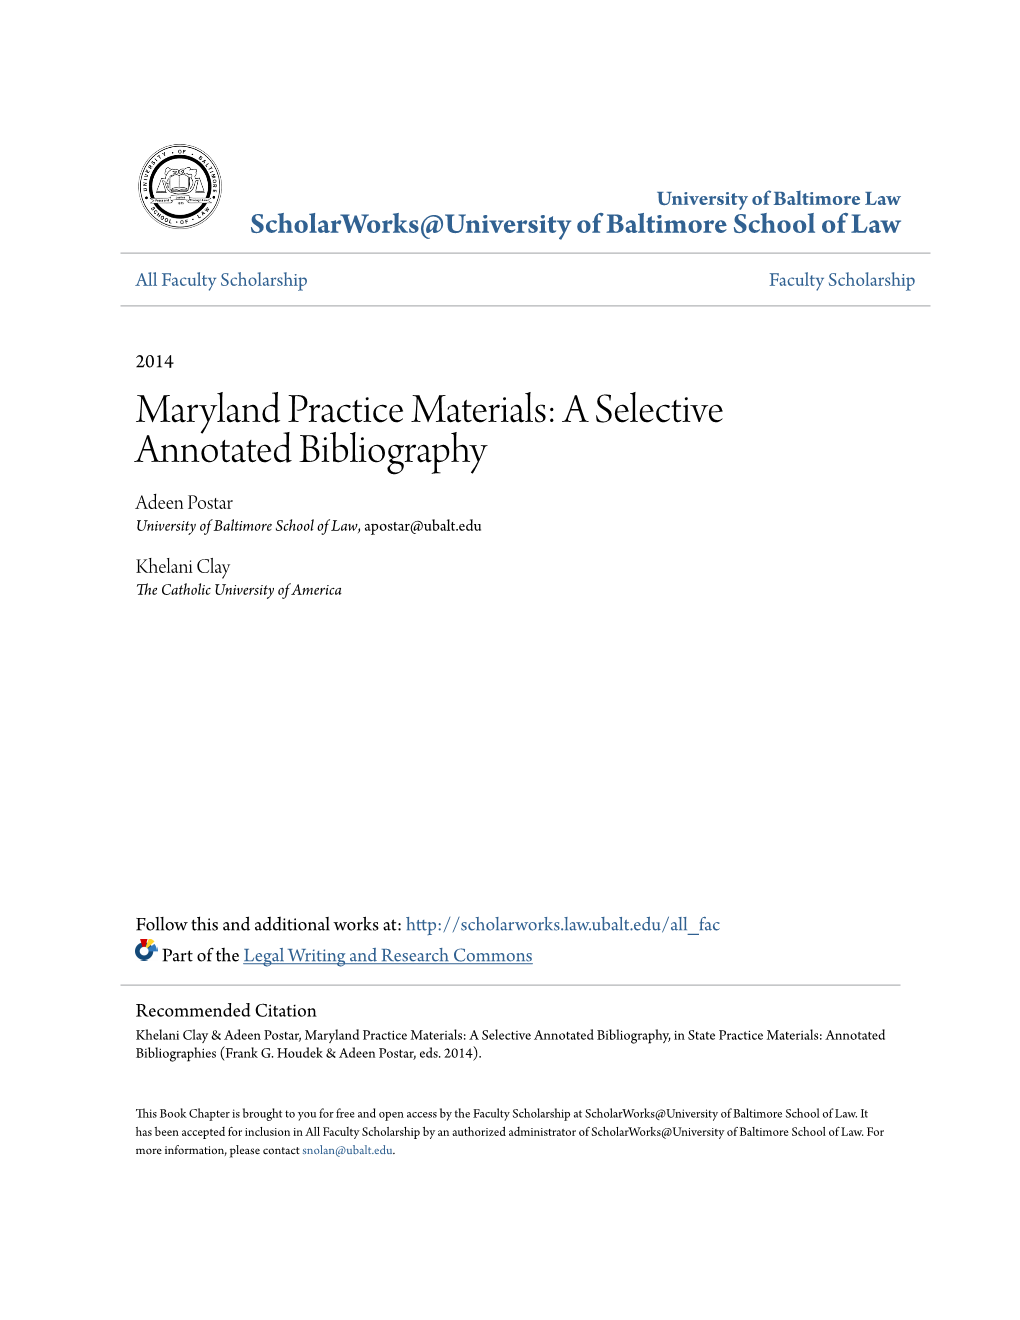 Maryland Practice Materials: a Selective Annotated Bibliography Adeen Postar University of Baltimore School of Law, Apostar@Ubalt.Edu